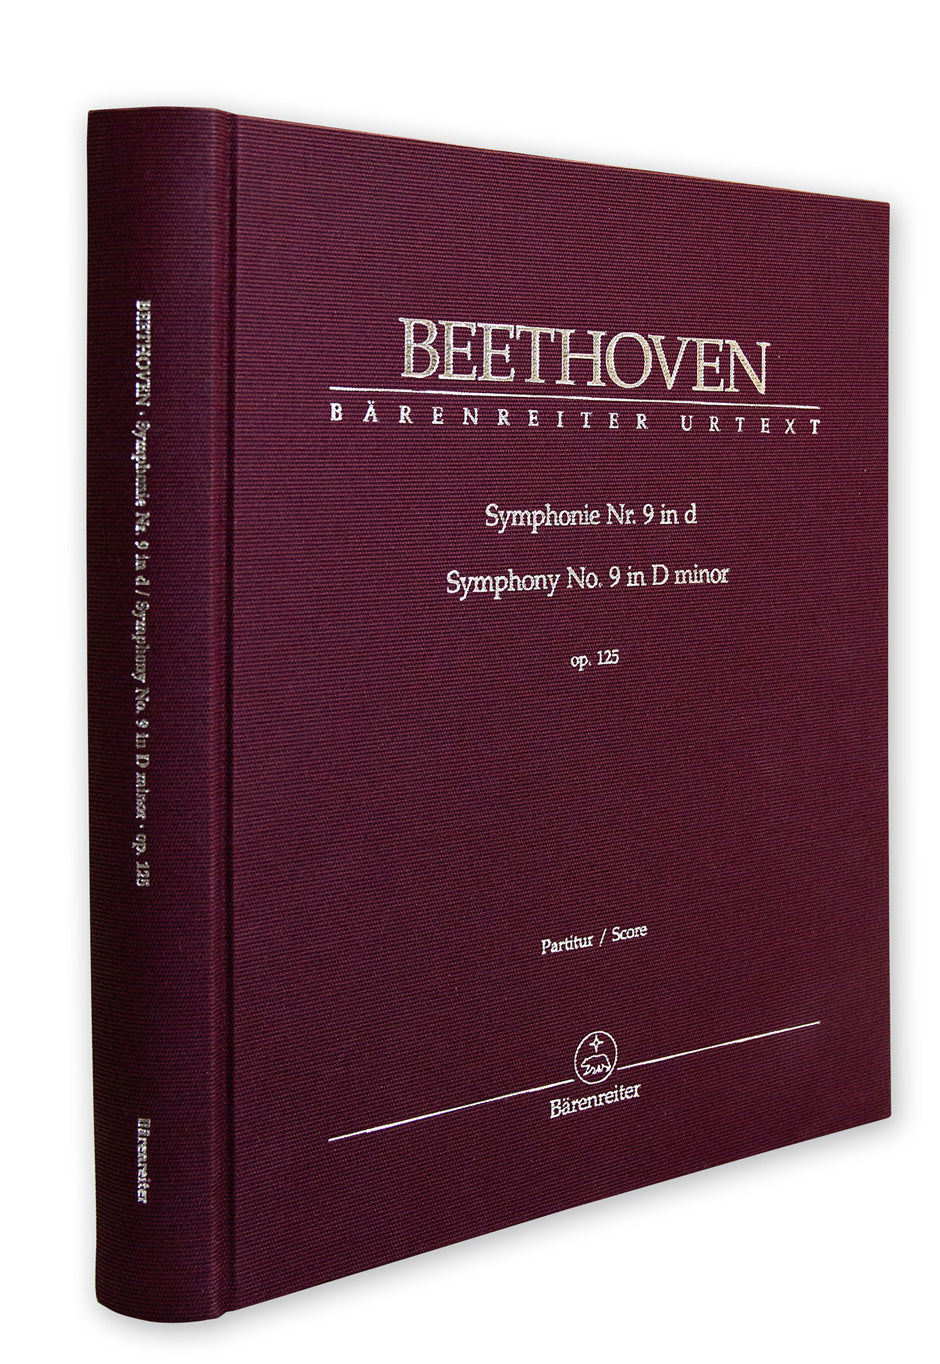 Beethoven Symphony no. 9 in D minor op. 125